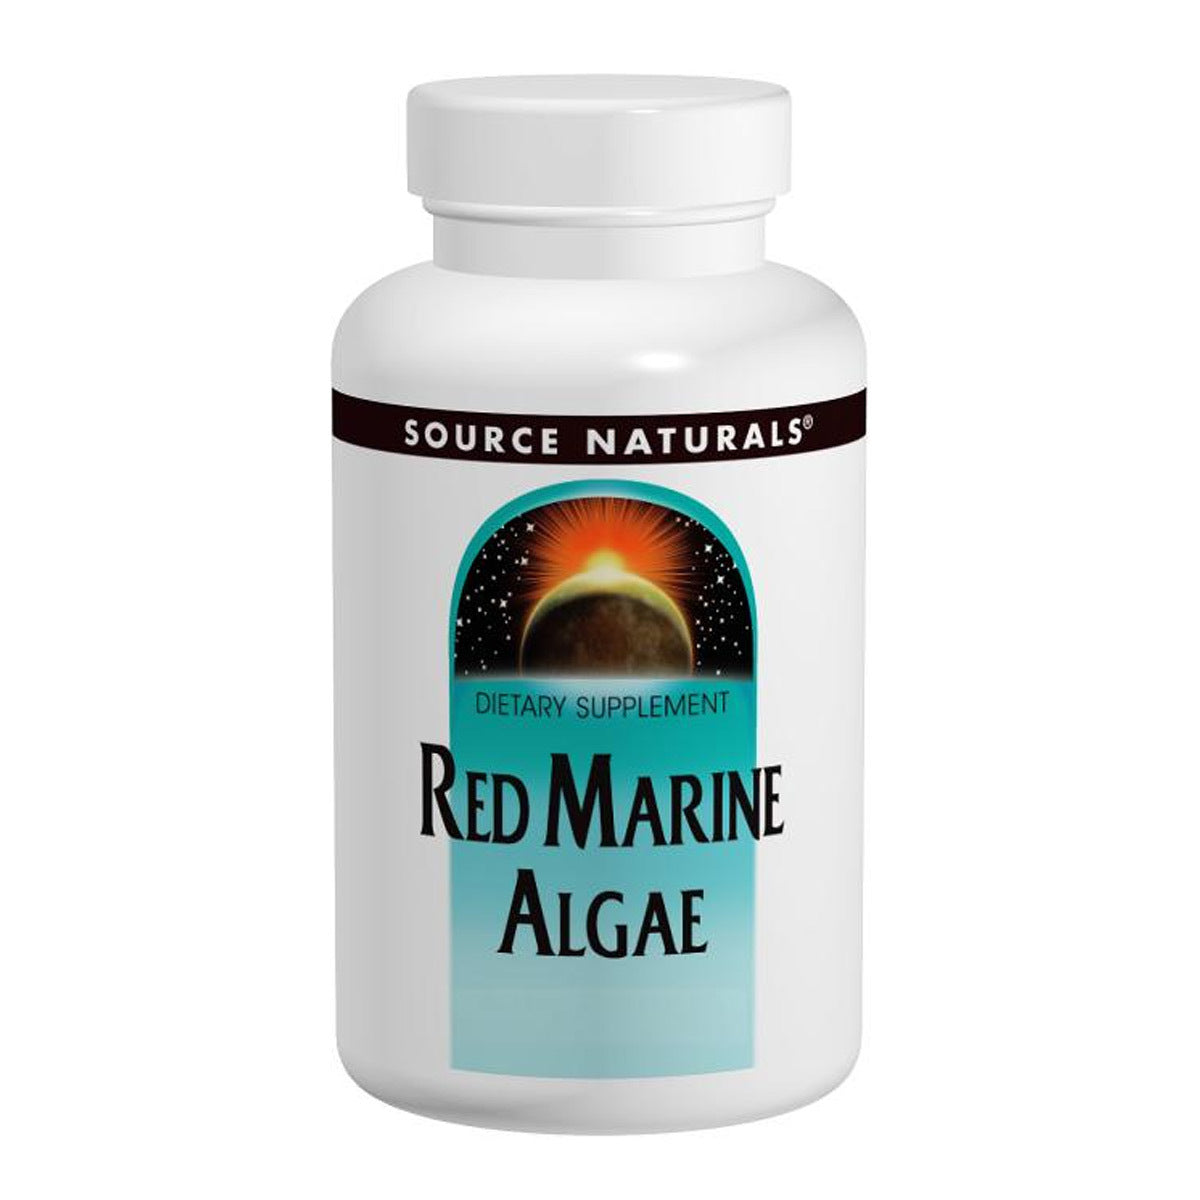 Primary image of Red Marine Algae